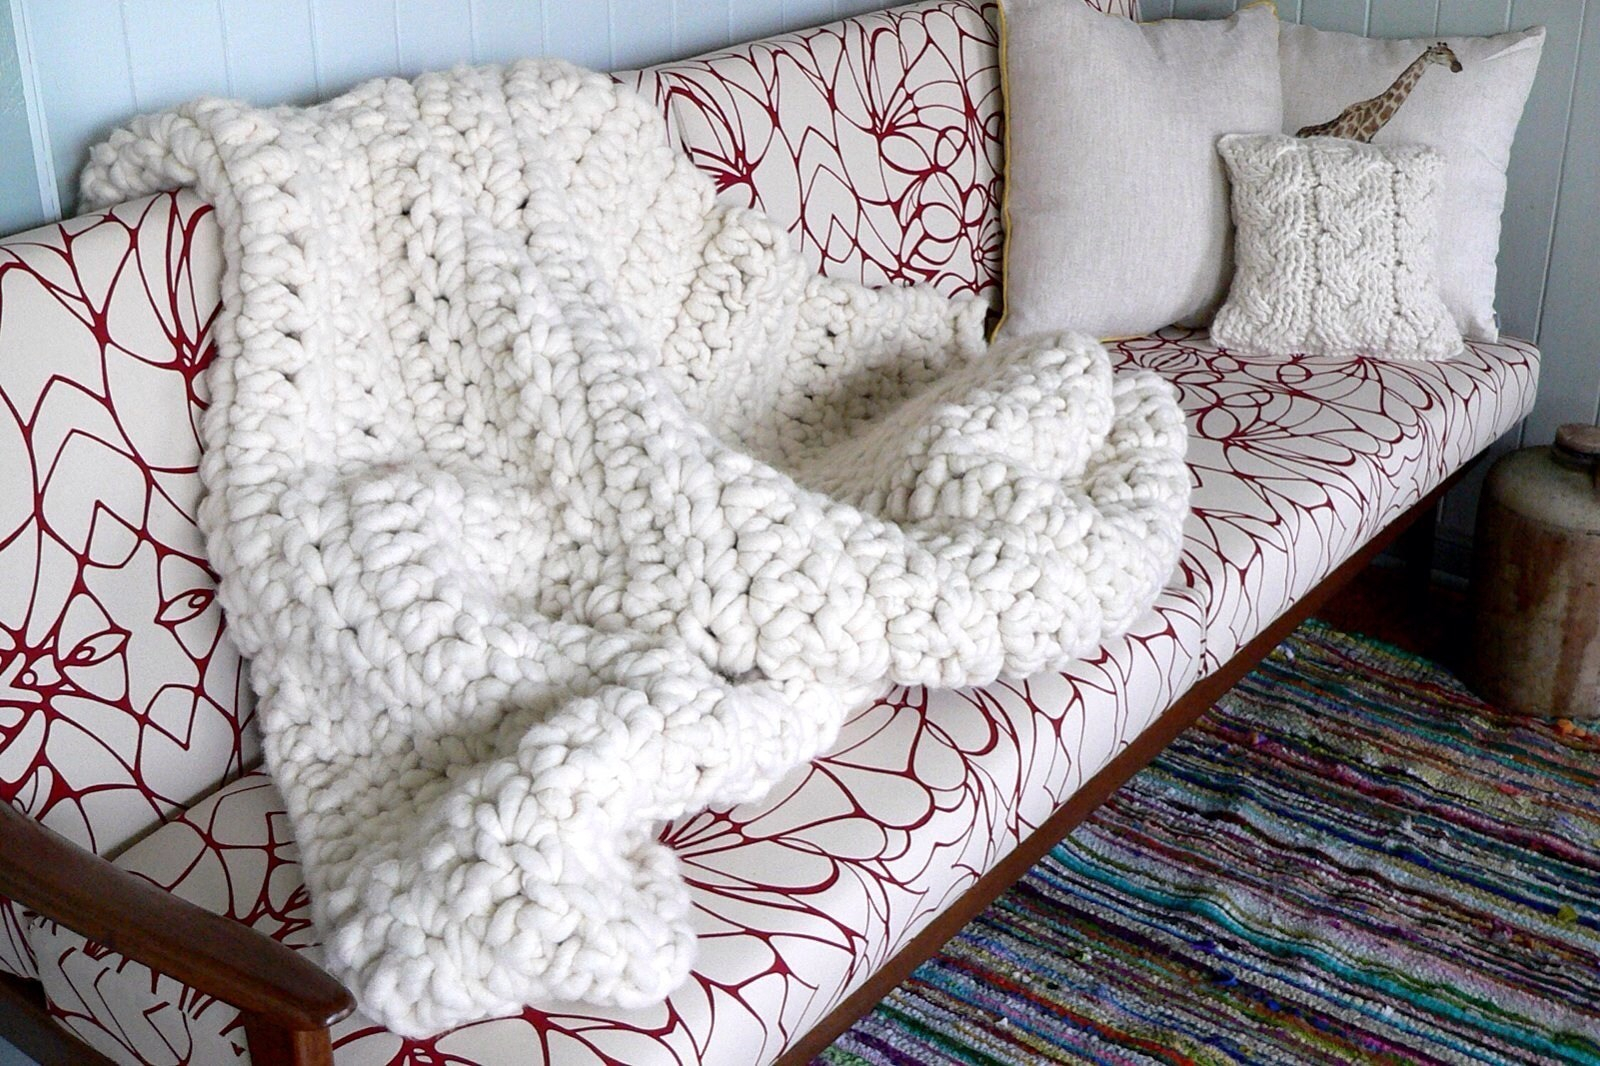 bulky-yarn-crochet-afghan-patterns-for-beginners-free-crochet-afghan-patterns-for-bulky-yarn